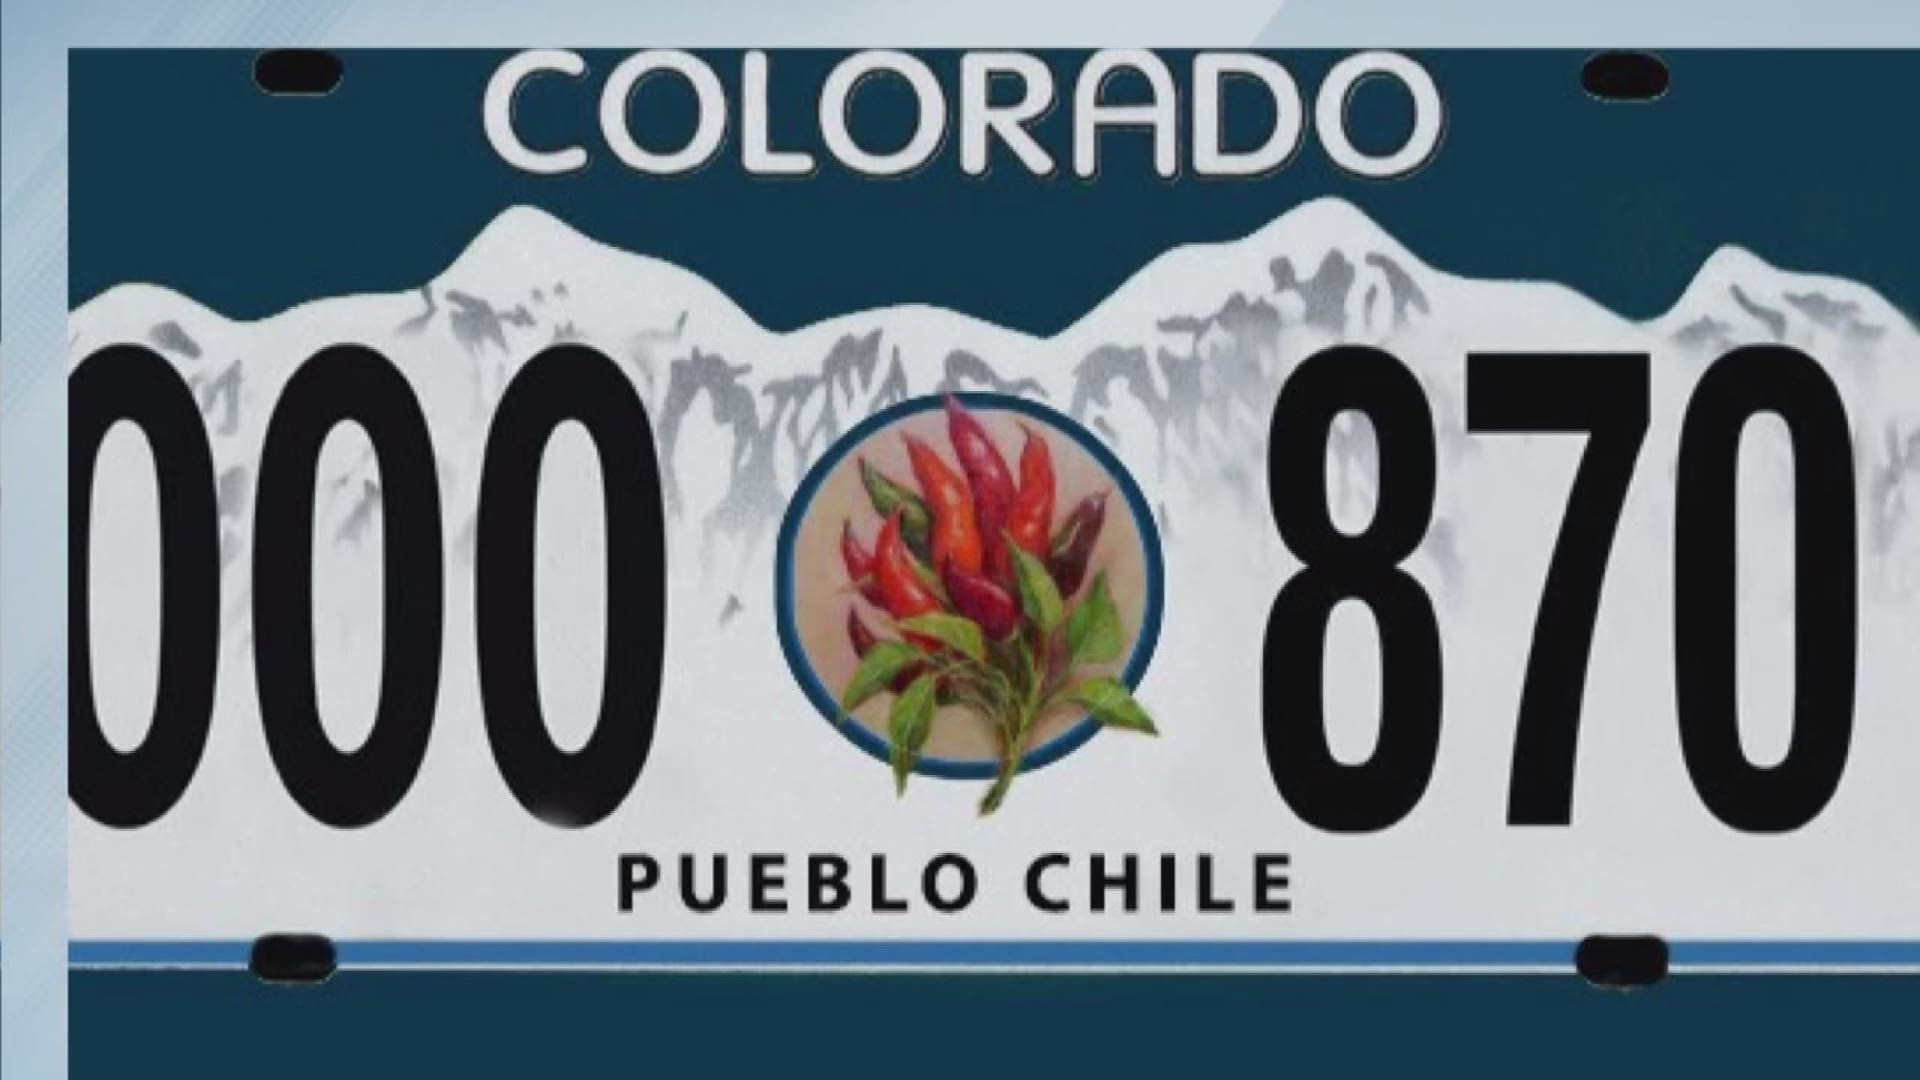 Random facts about Colorado license plates